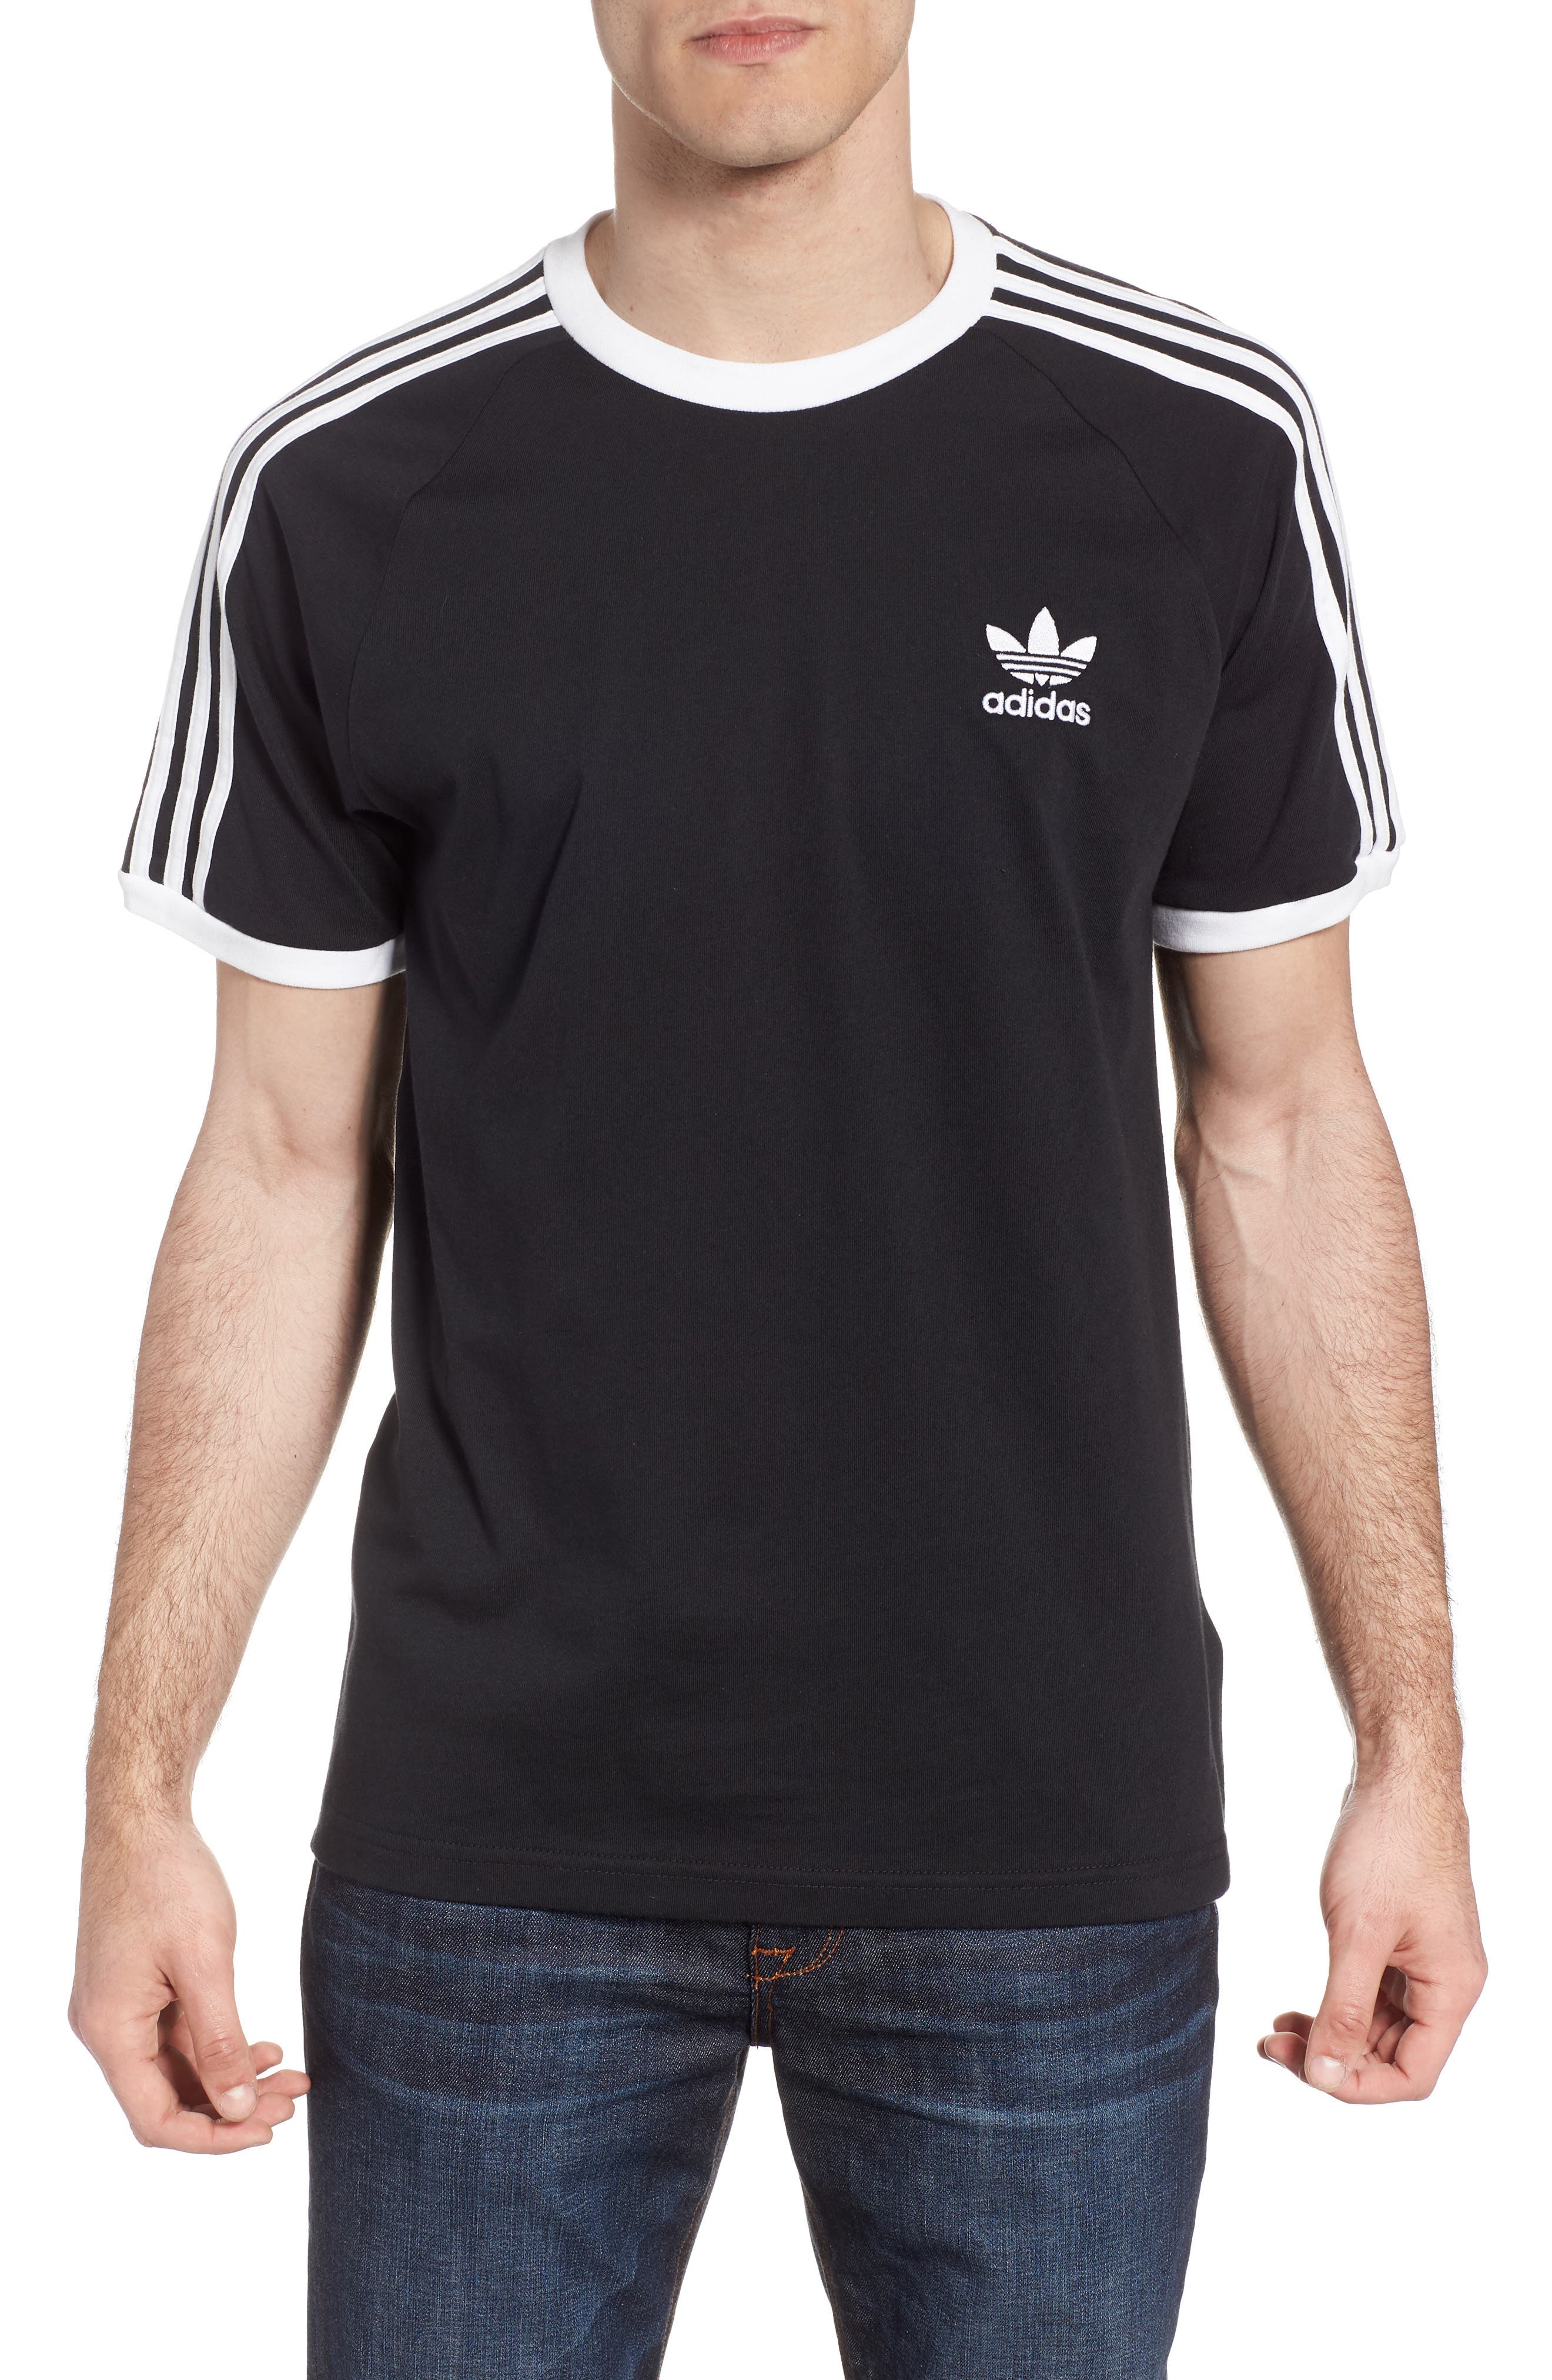 UPC 191027121004 product image for Men's Adidas Originals 3-Stripes T-Shirt, Size Small - Black | upcitemdb.com